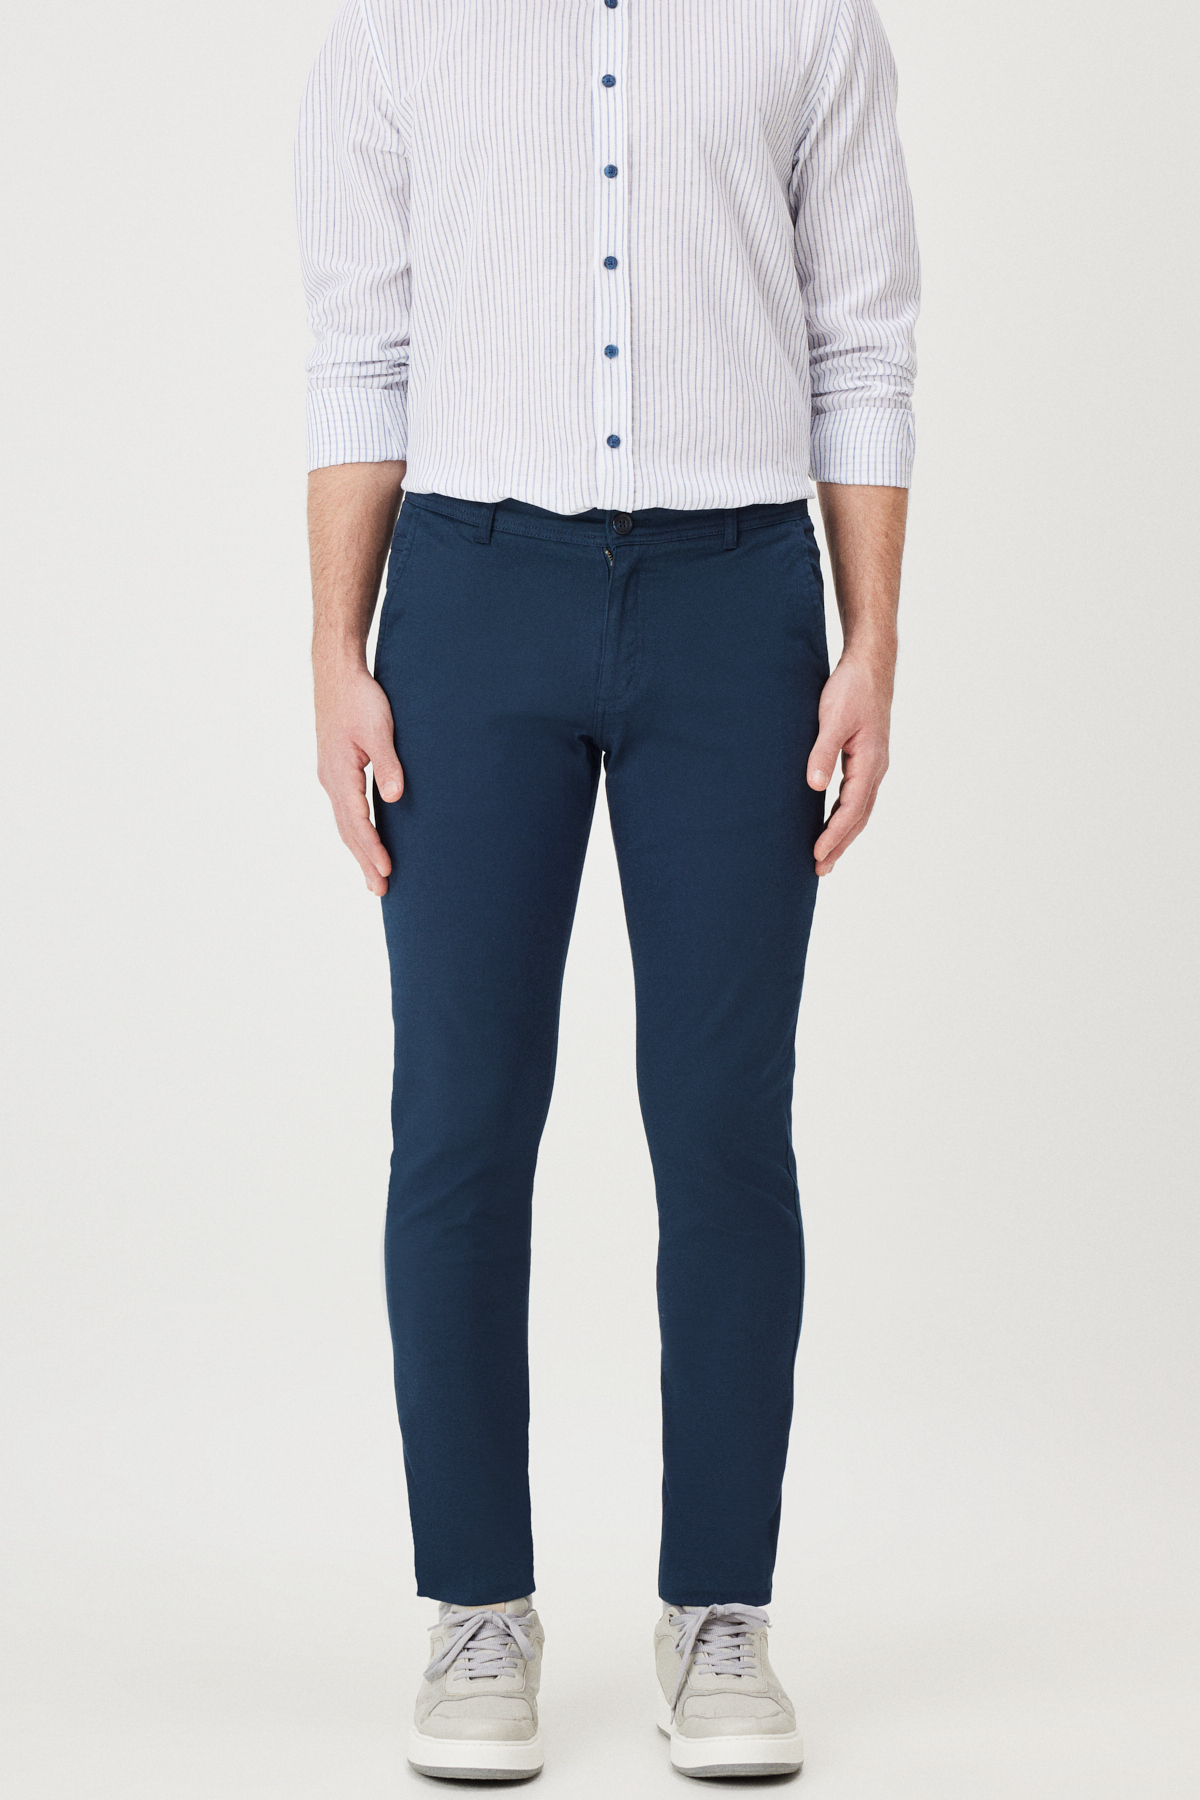 AC&Co / Altınyıldız Classics Men's Navy Blue Canvas Slim Fit Slim Fit Fitted Side Pockets Flexible Chino Trousers.